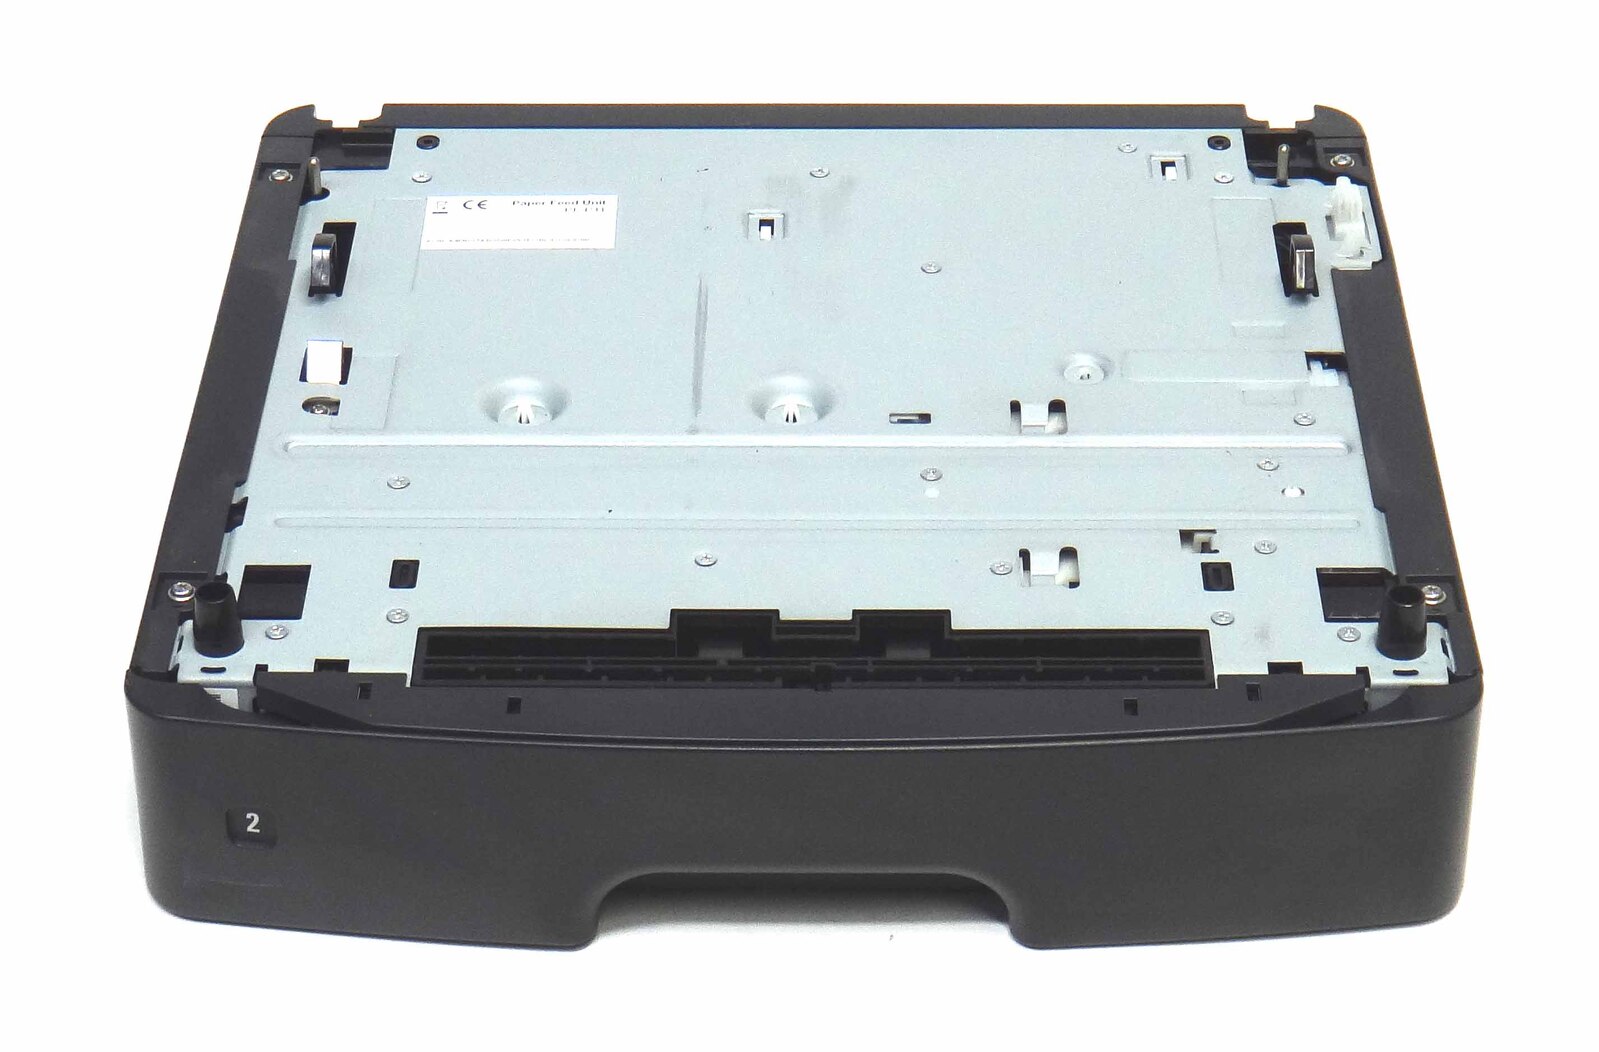 Konica Minolta PF-P11 250 Sheet Lower Feeder Unit for Bizhub Printers - New, Opened Box